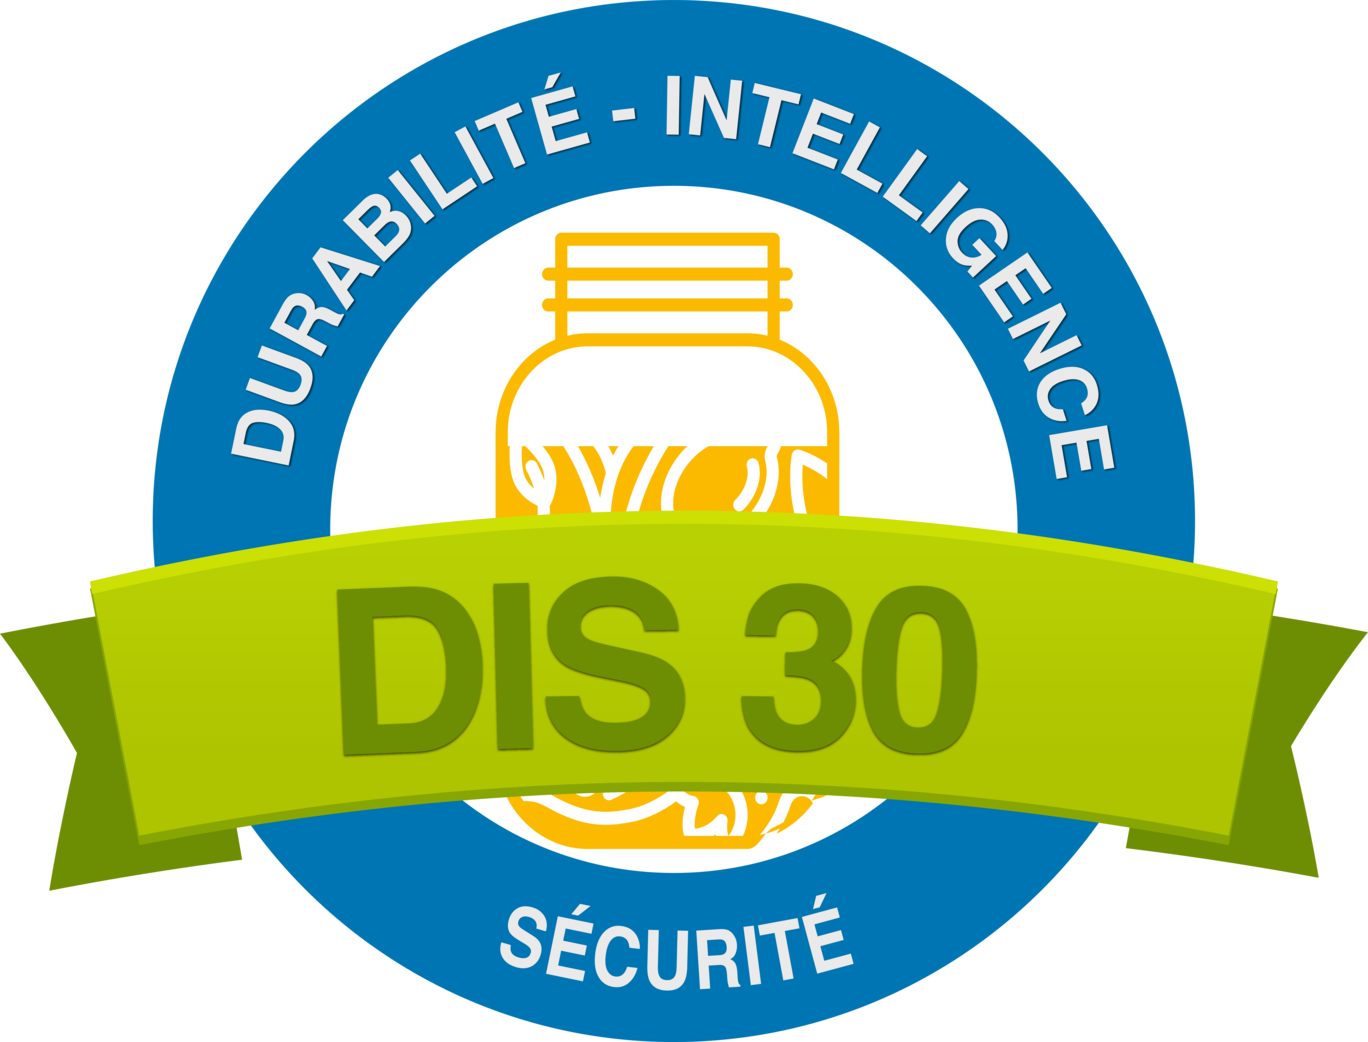 logo DIS30